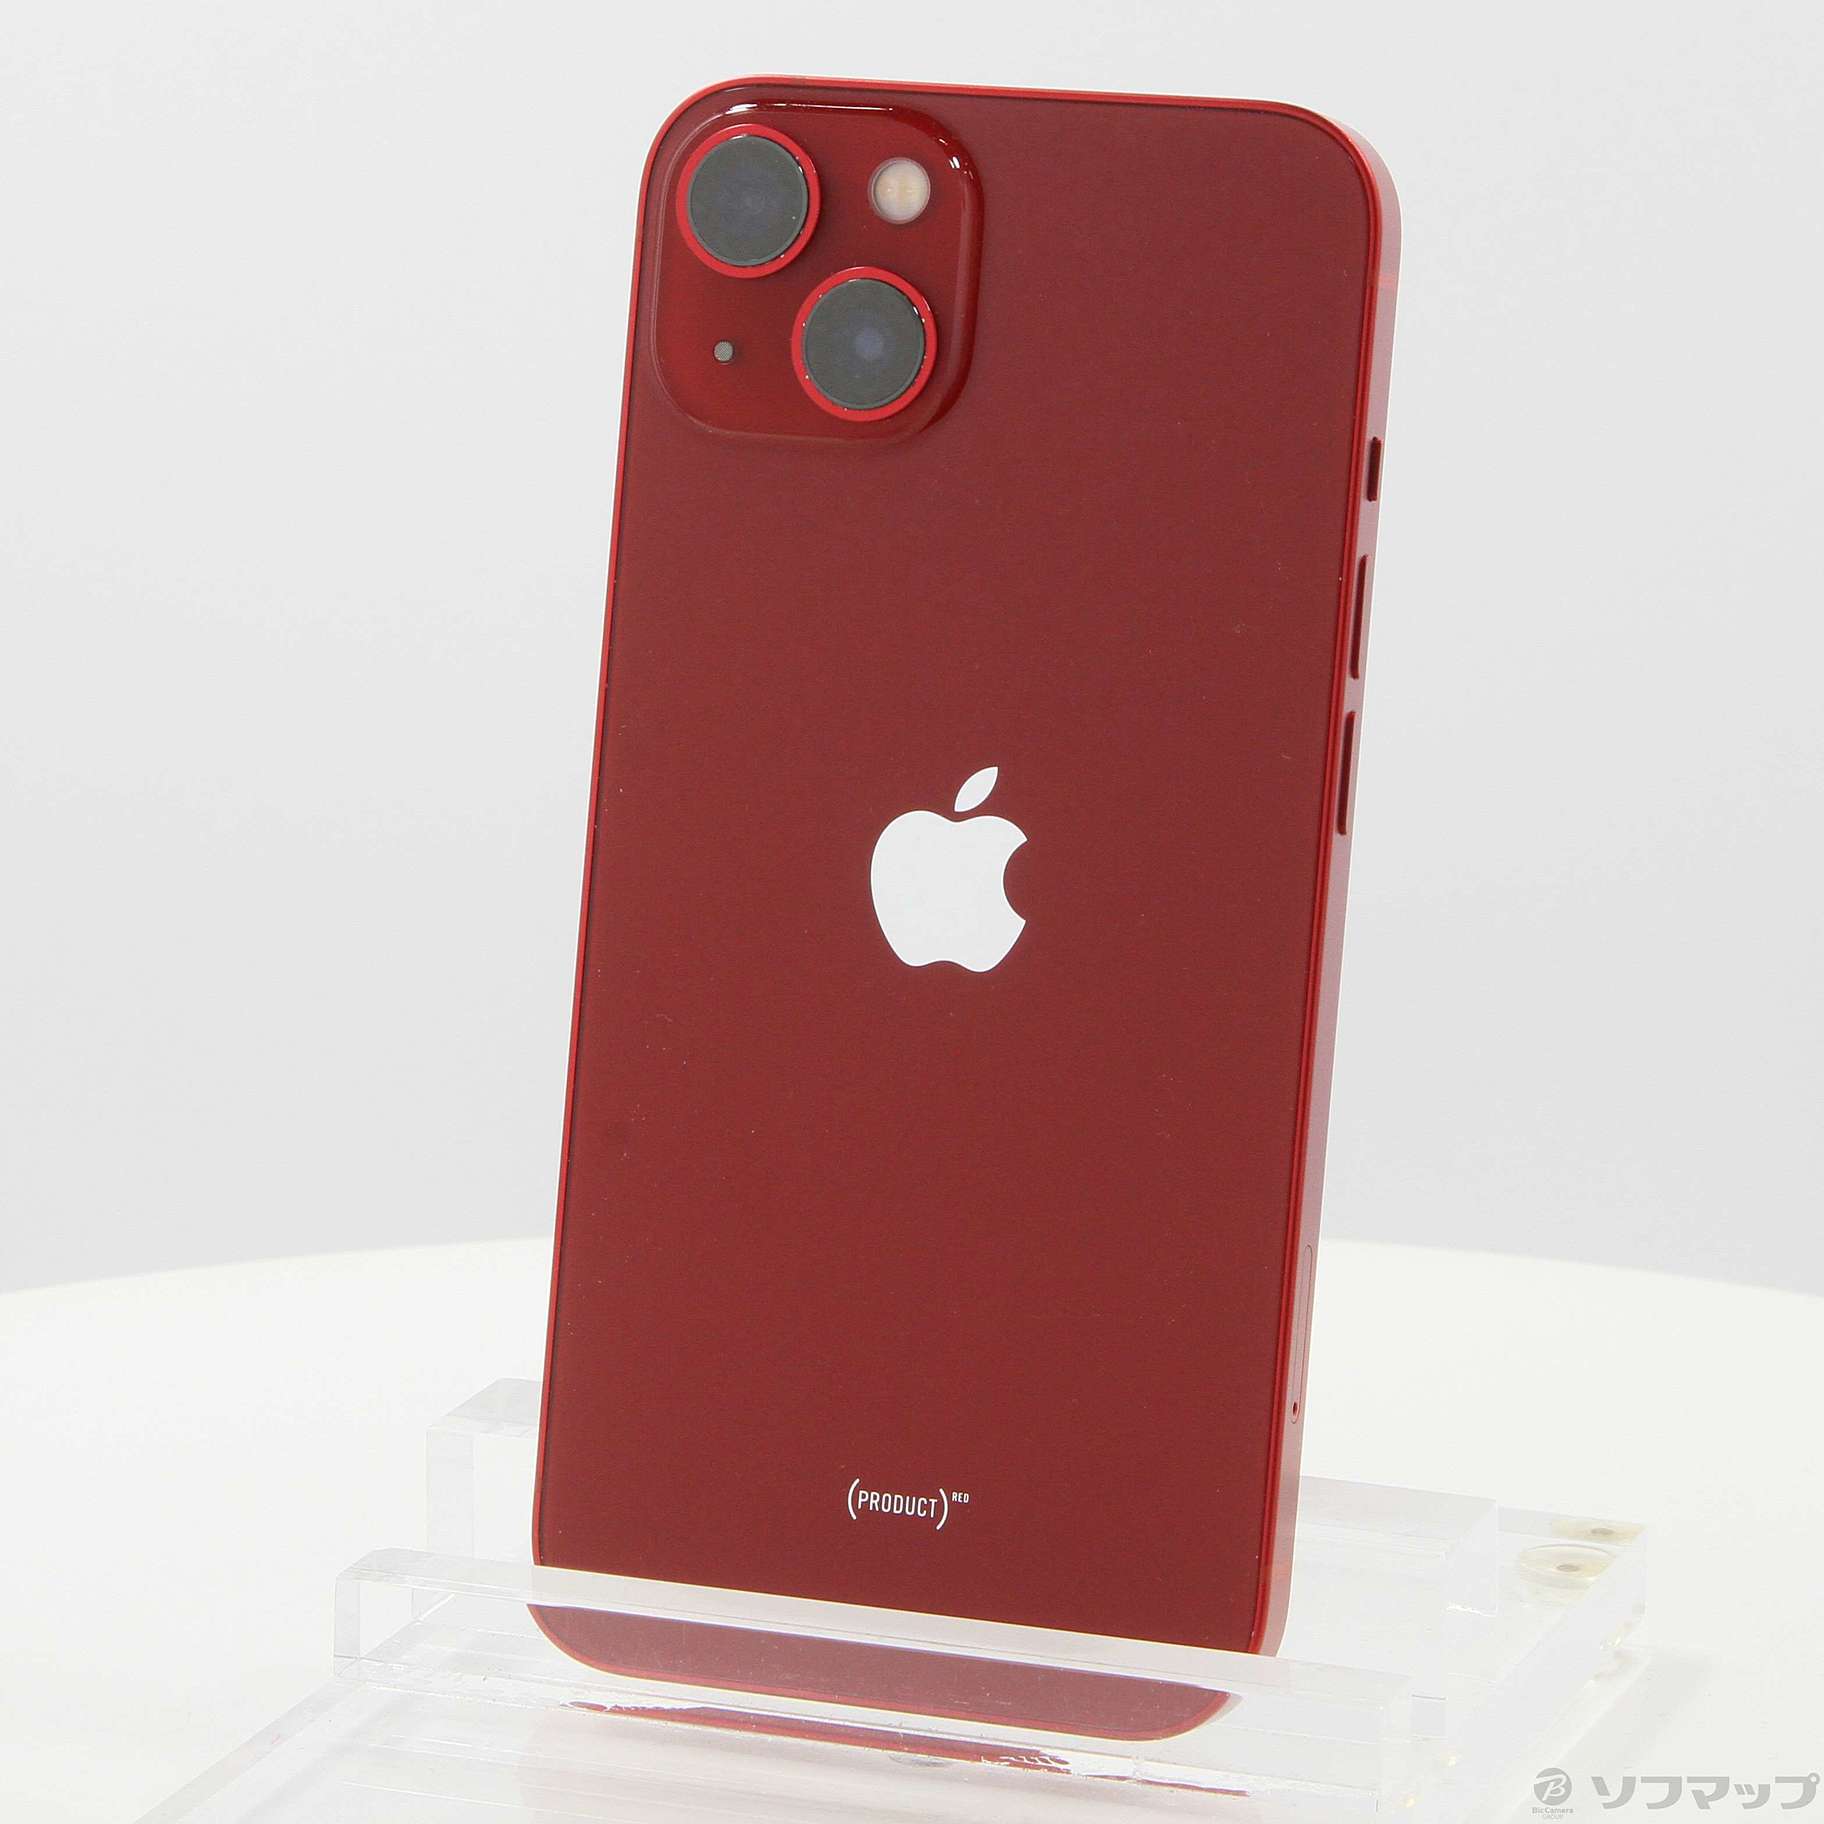 iPhone 13 (PRODUCT)RED 128GB SIMフリー [レッド] 中古(白ロム)価格 